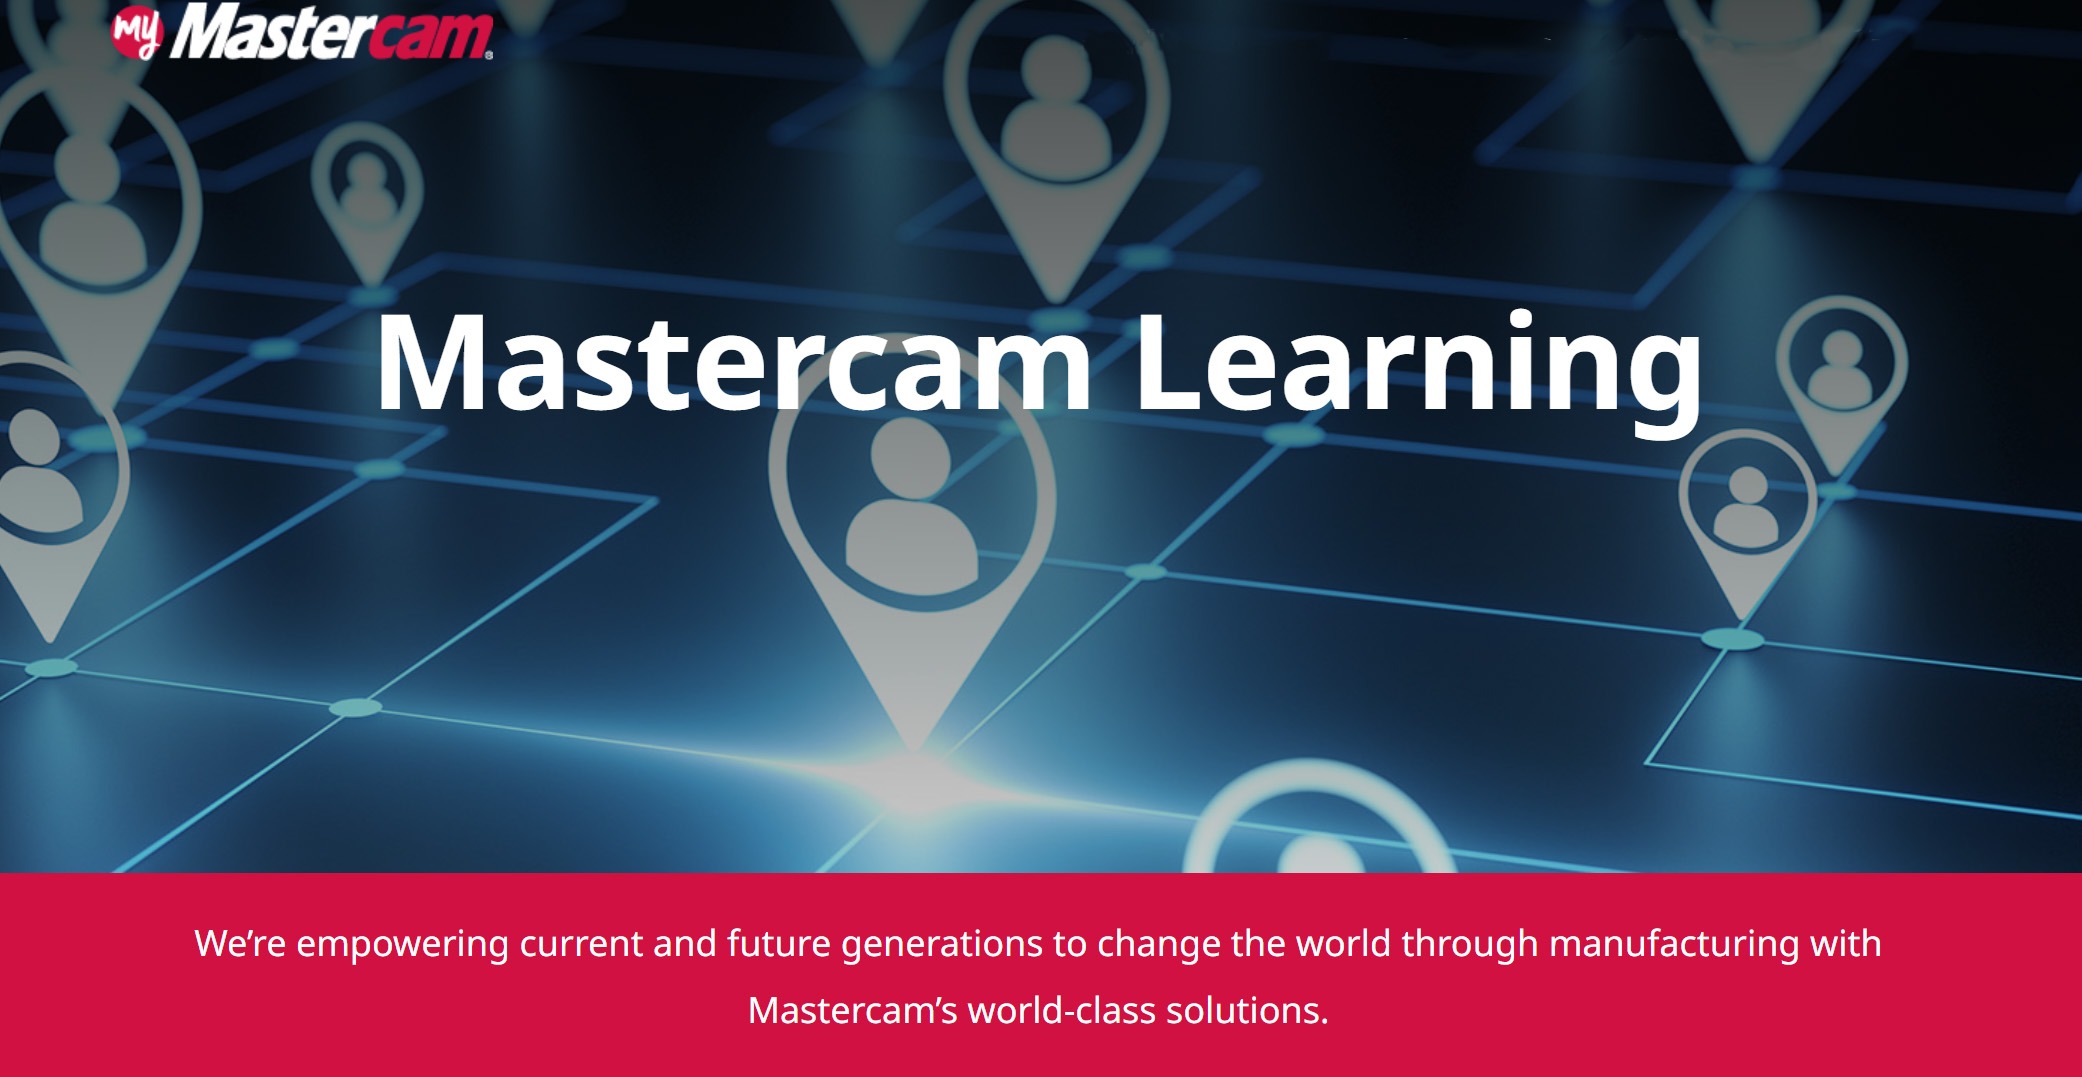 myMastercam Learning Hub